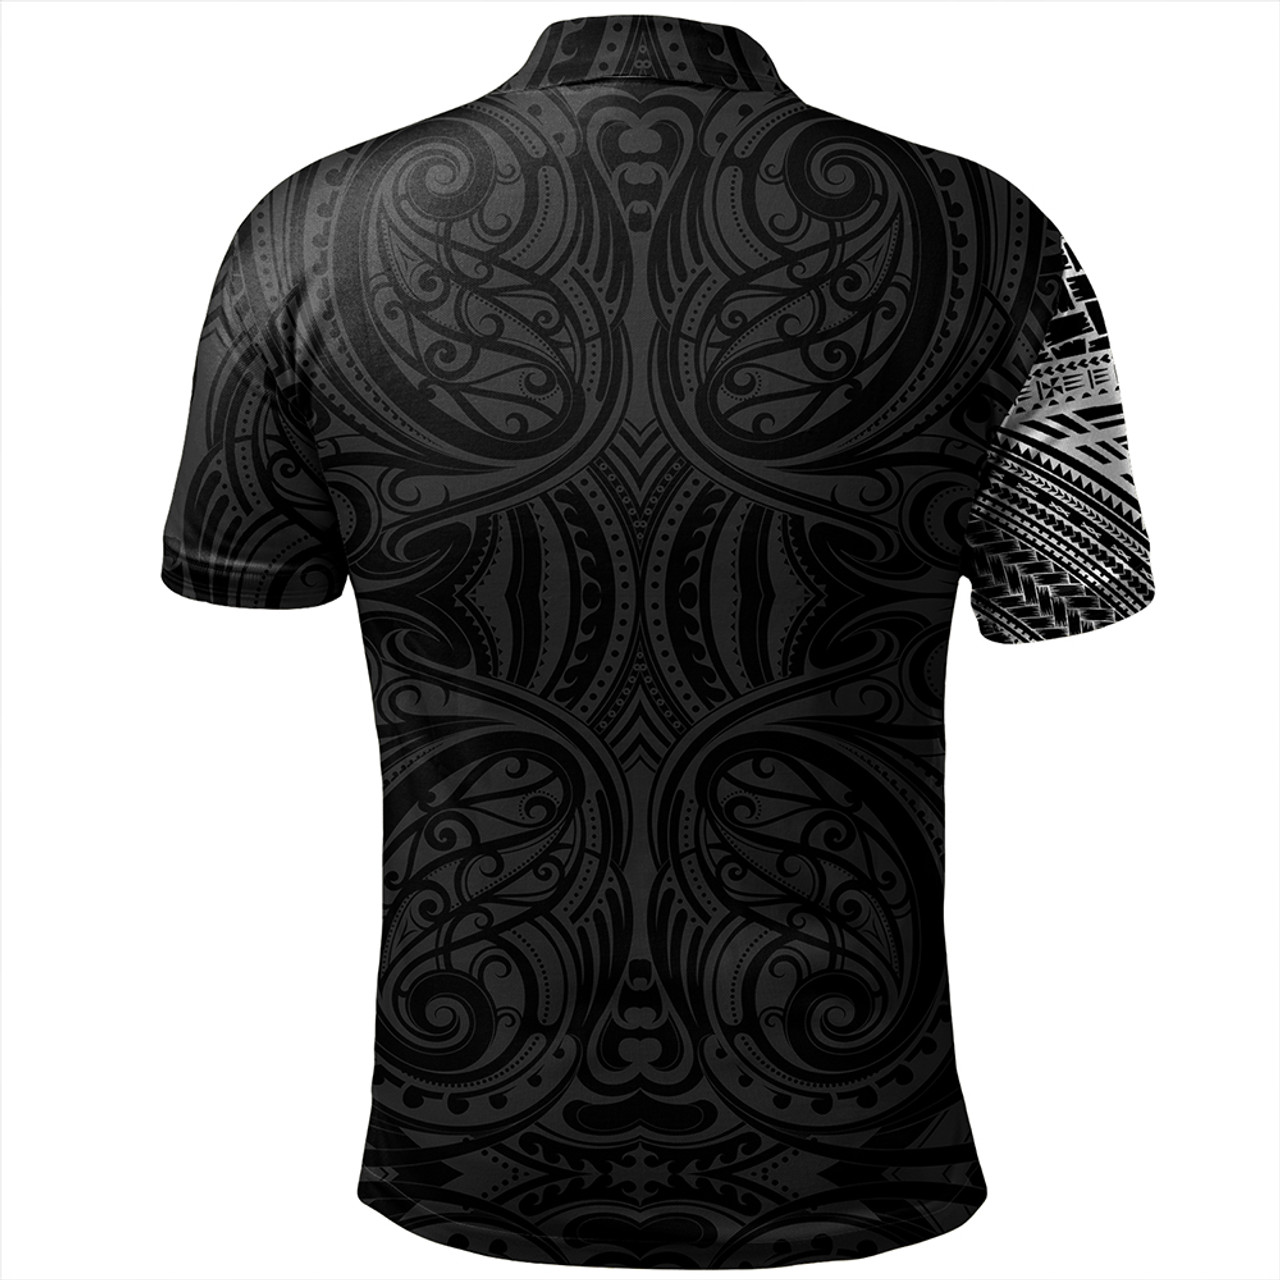 Samoa Tribal Maori Tattoo Roman Reigns Polo Shirt White